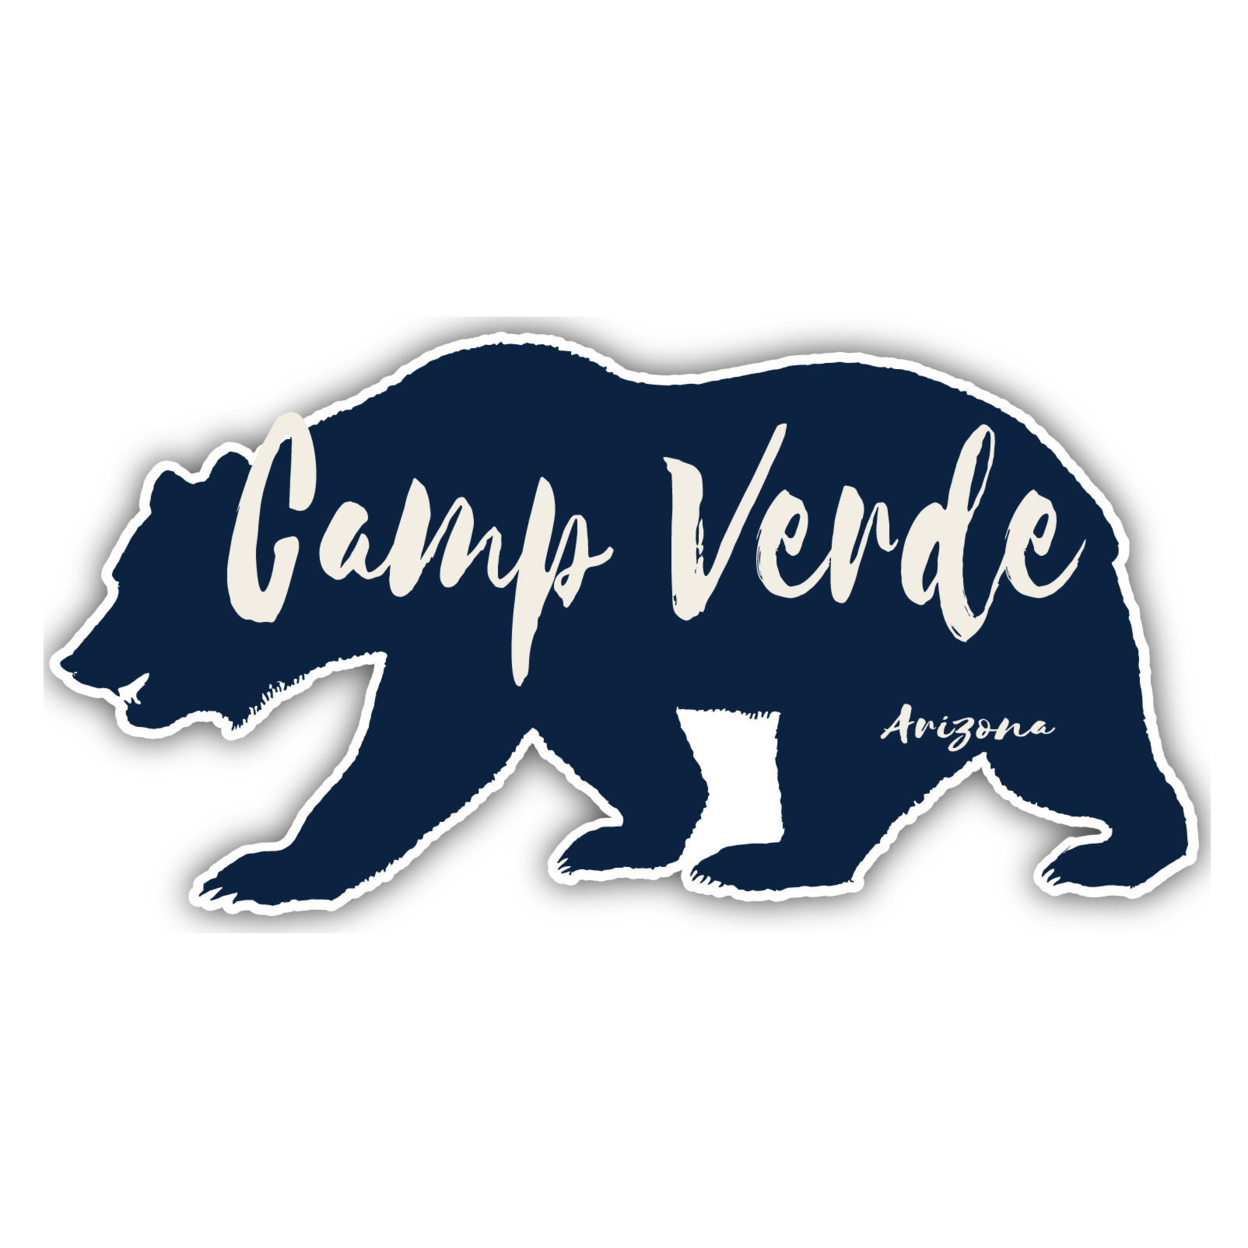 Camp Verde Arizona Souvenir Decorative Stickers (Choose Theme And Size) - 4-Pack, 2-Inch, Bear